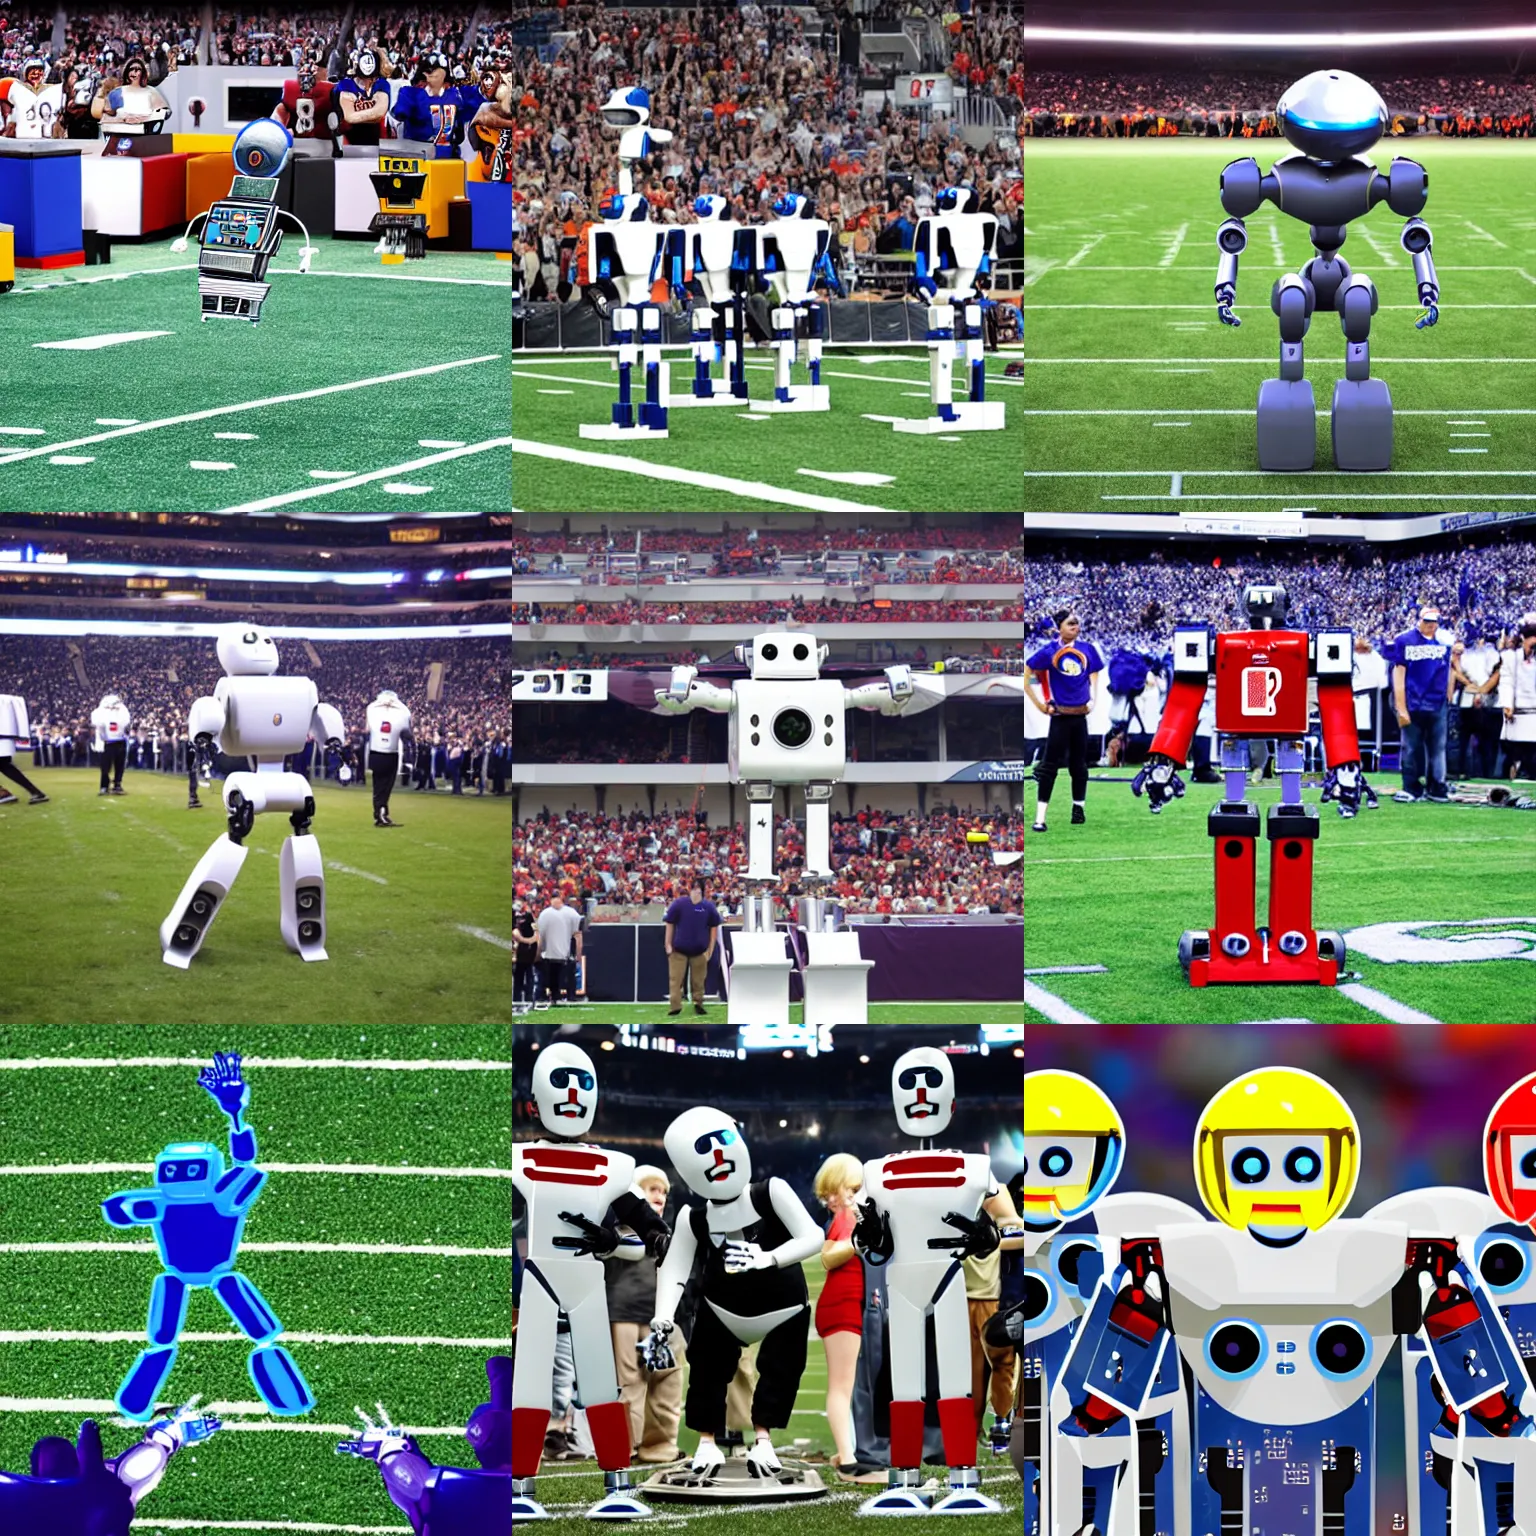 Prompt: <photo still half-time robot-games>Robot NFL game half-time show</photo>